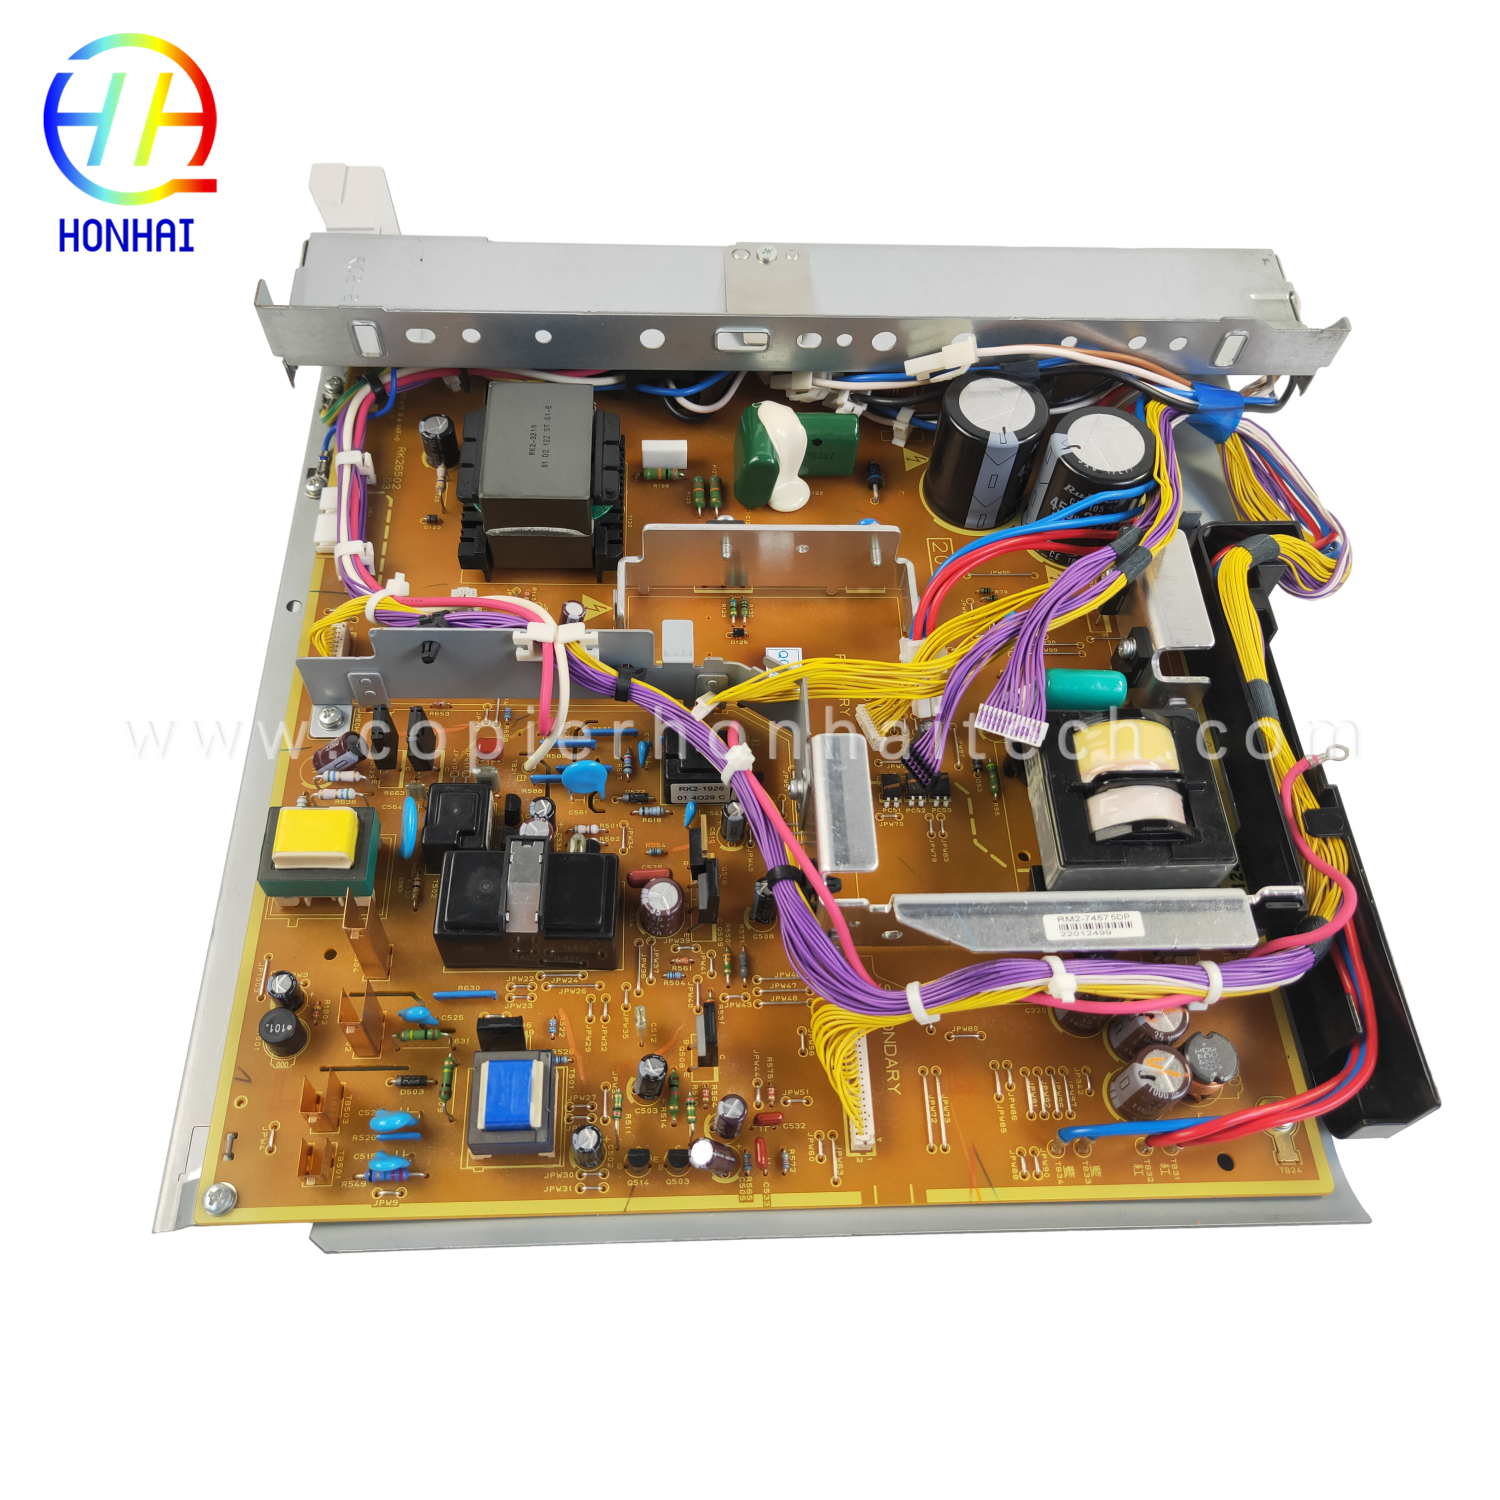 https://www.copierhonhaitech.com/high-voltage-power-supply-220v-for-hp-laserjet-m630-rm2-5827-000-product/